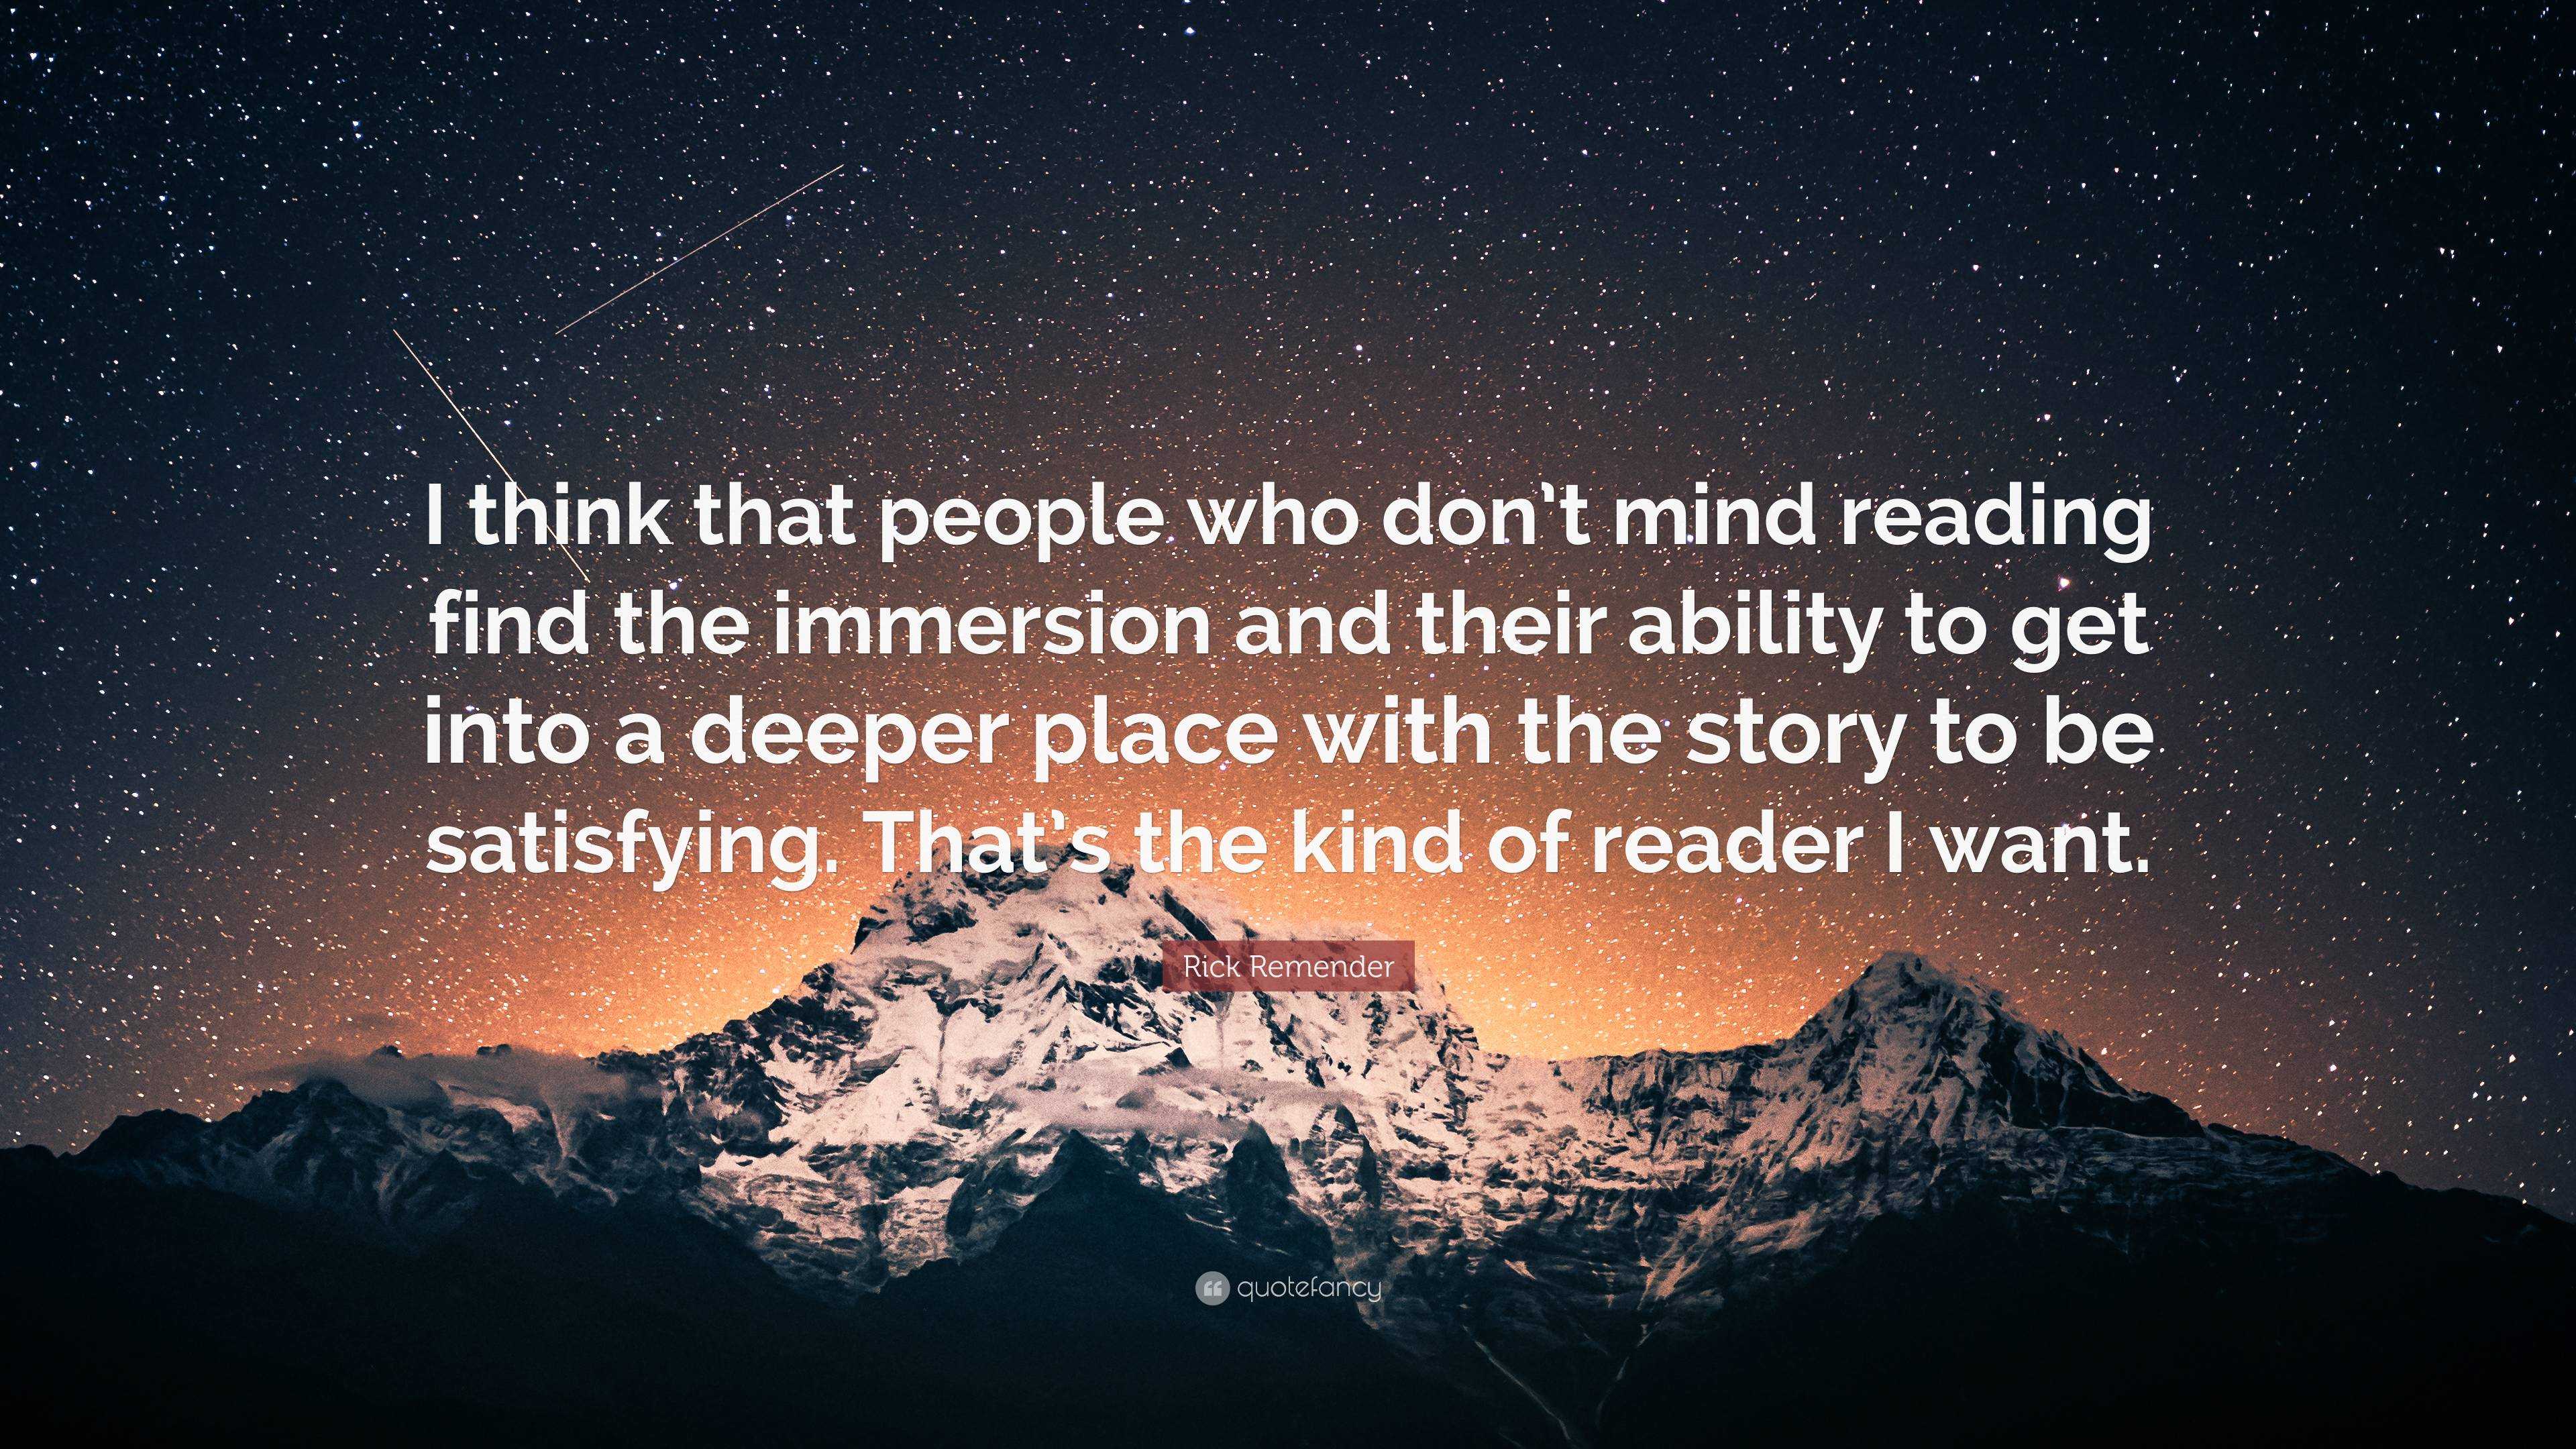 Don't Be a Mind-Reader